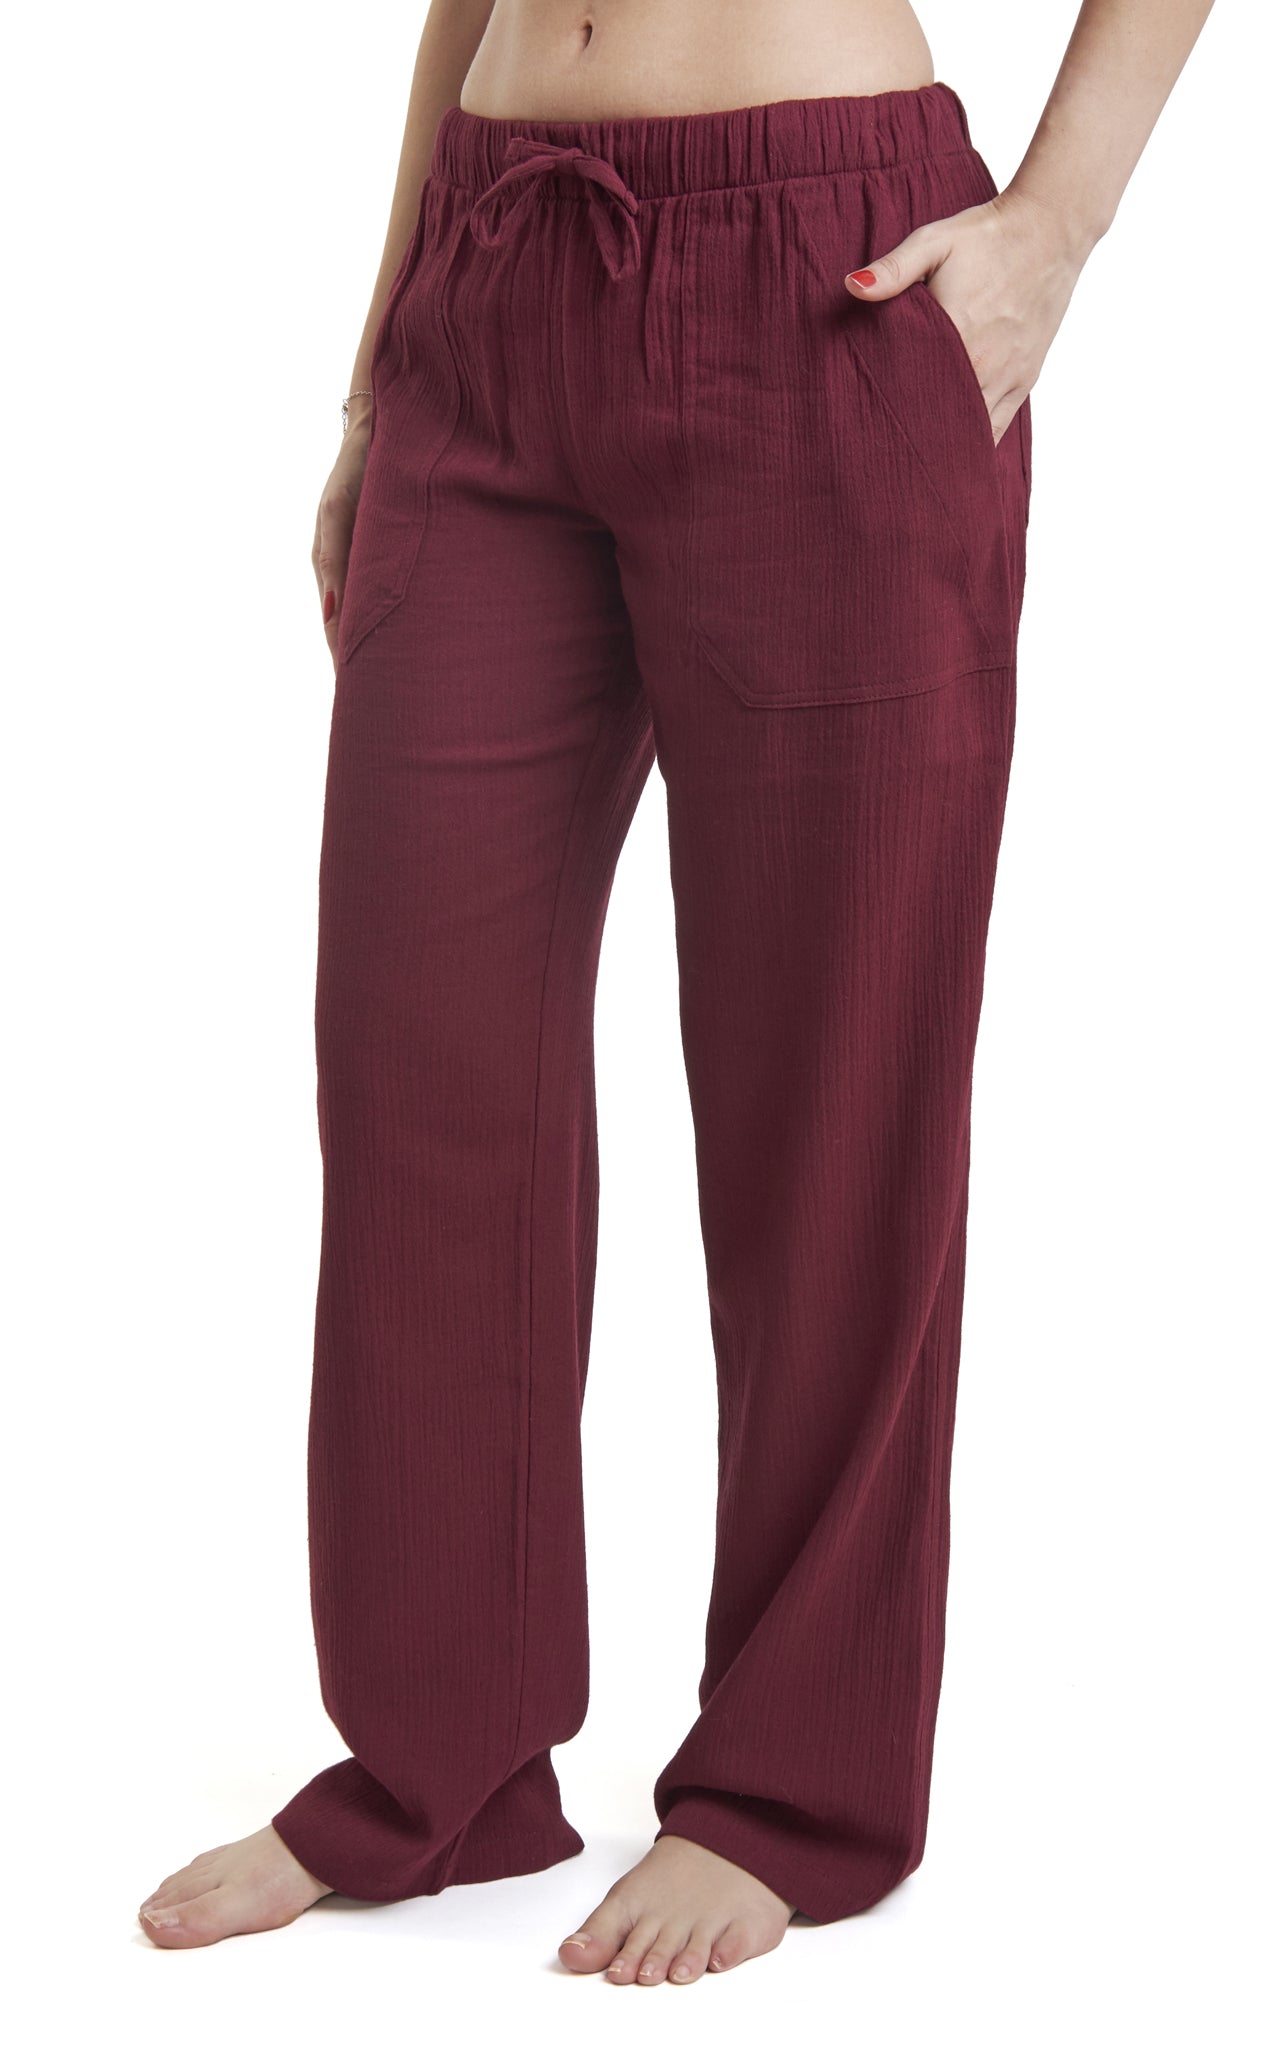 Women's Gauze Cotton PJ & Beach Pants with Pockets (Burgundy) – J & Ce